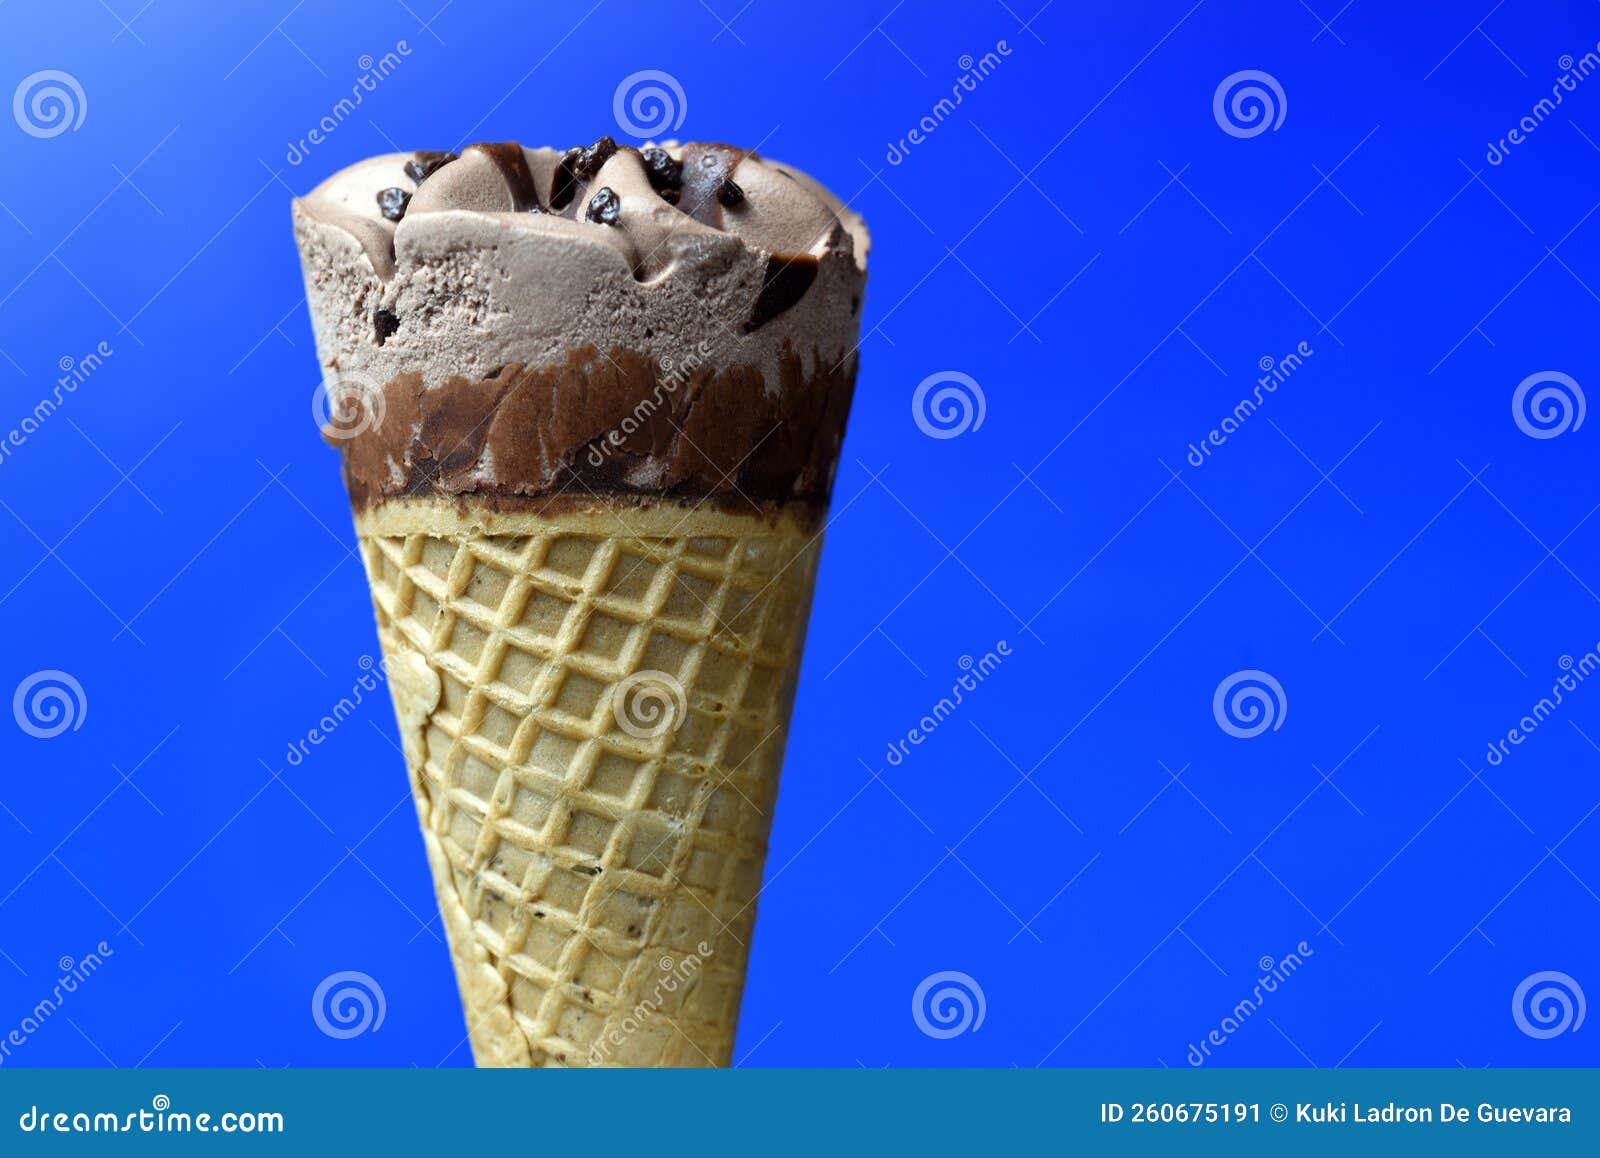 chocolate ice cream cone on blue background